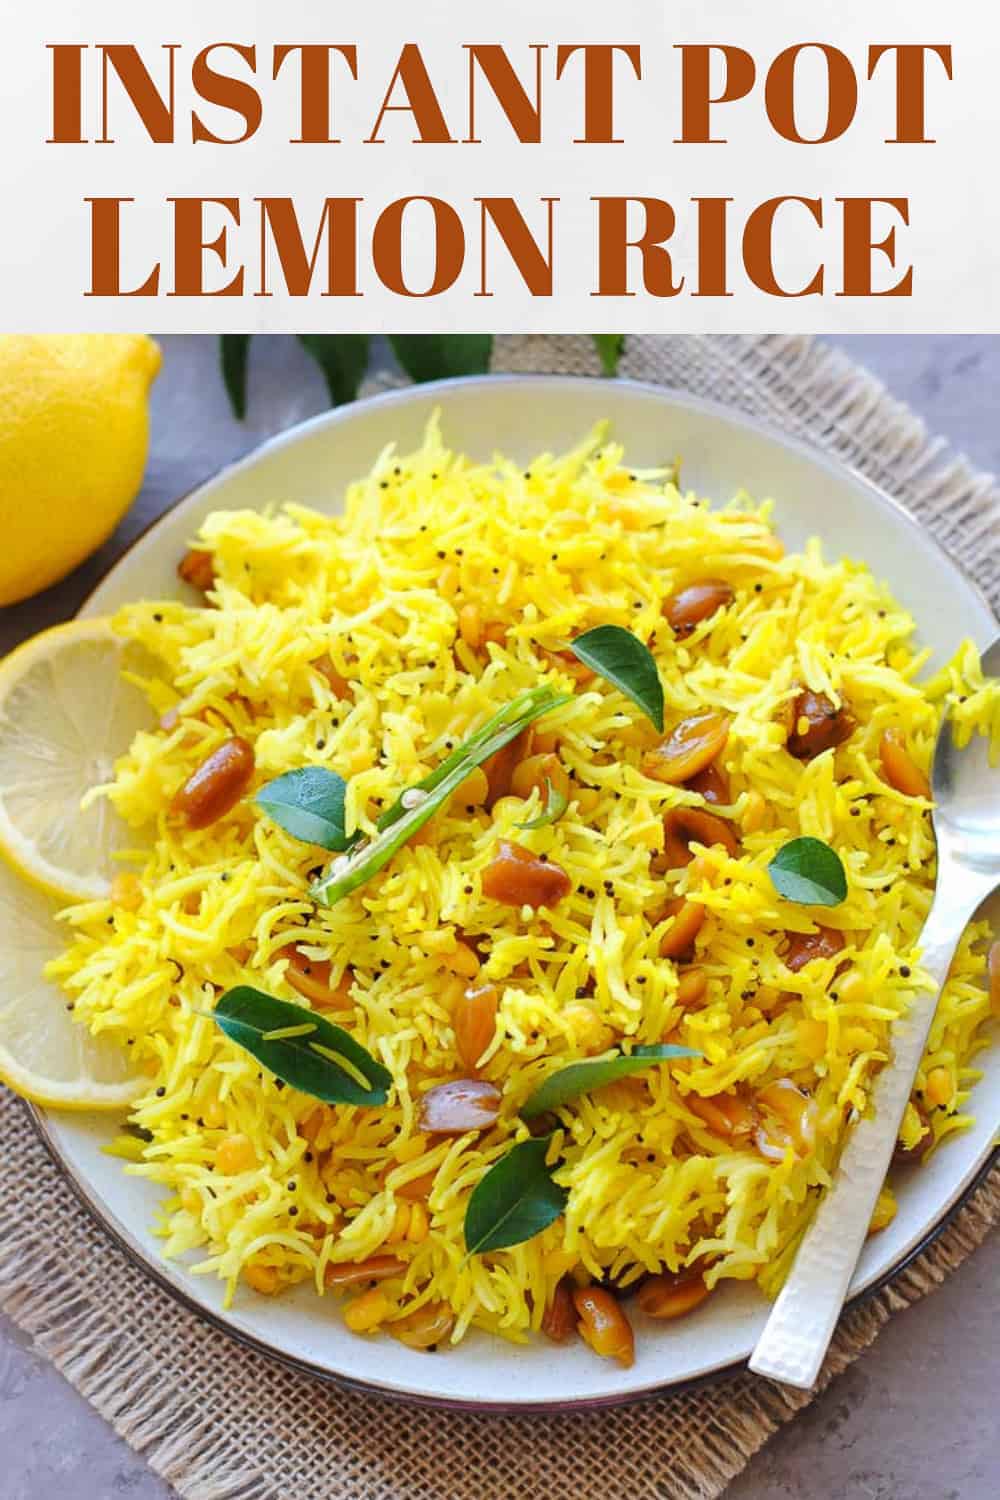 South Indian Lemon Rice Recipe (Instant Pot) | Indian Ambrosia